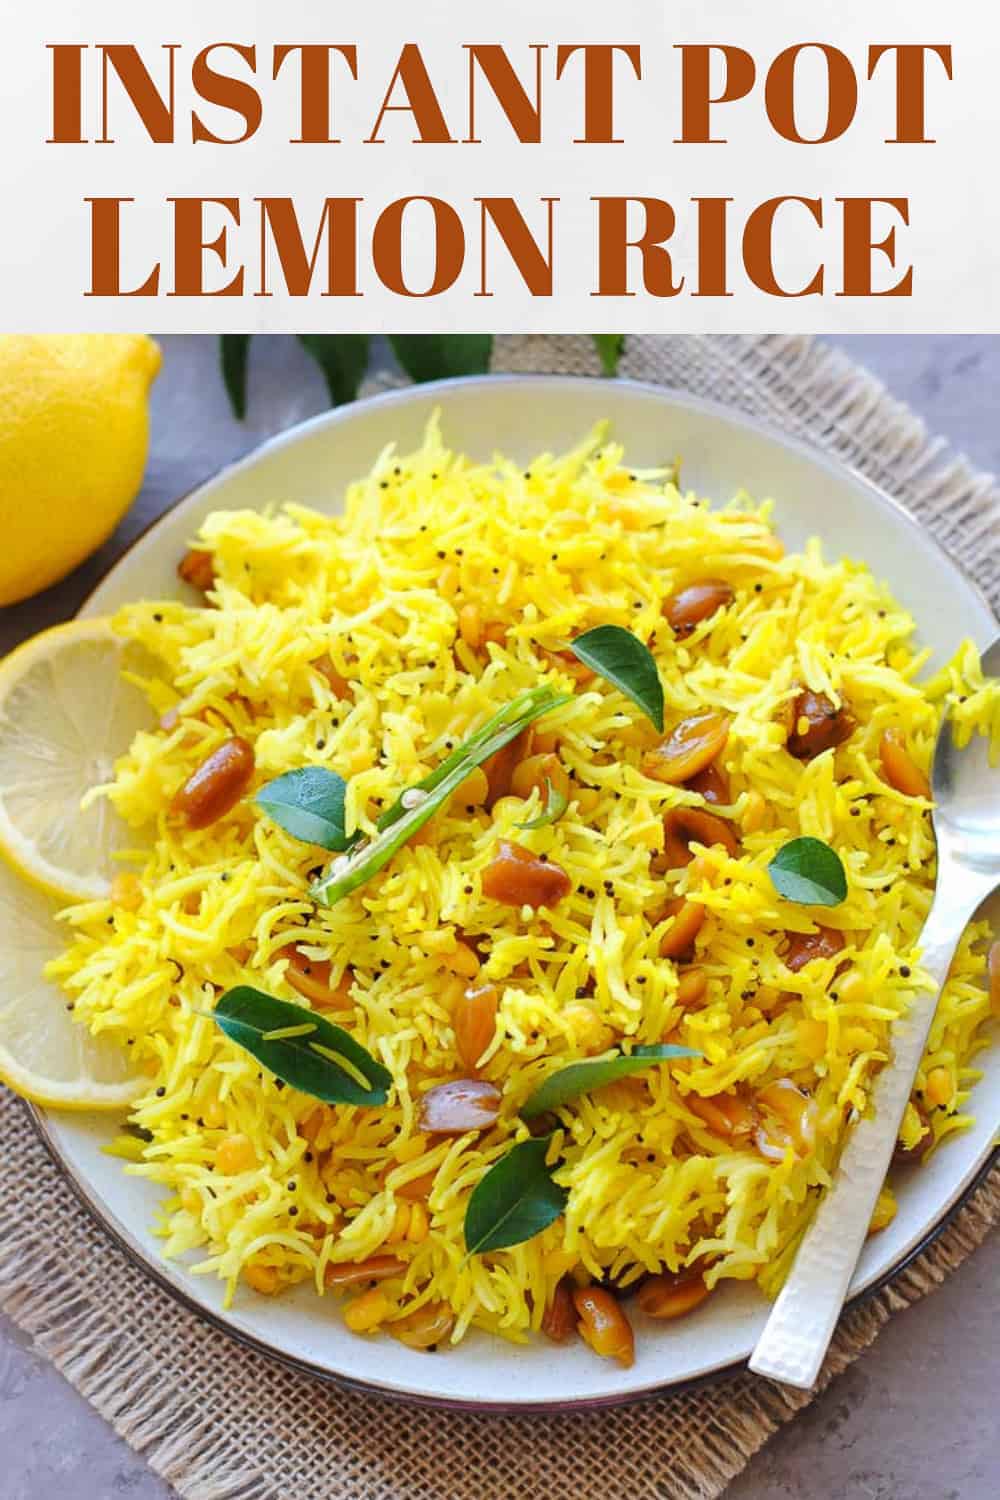 South Indian Lemon Rice Recipe (Instant Pot) | Indian Ambrosia